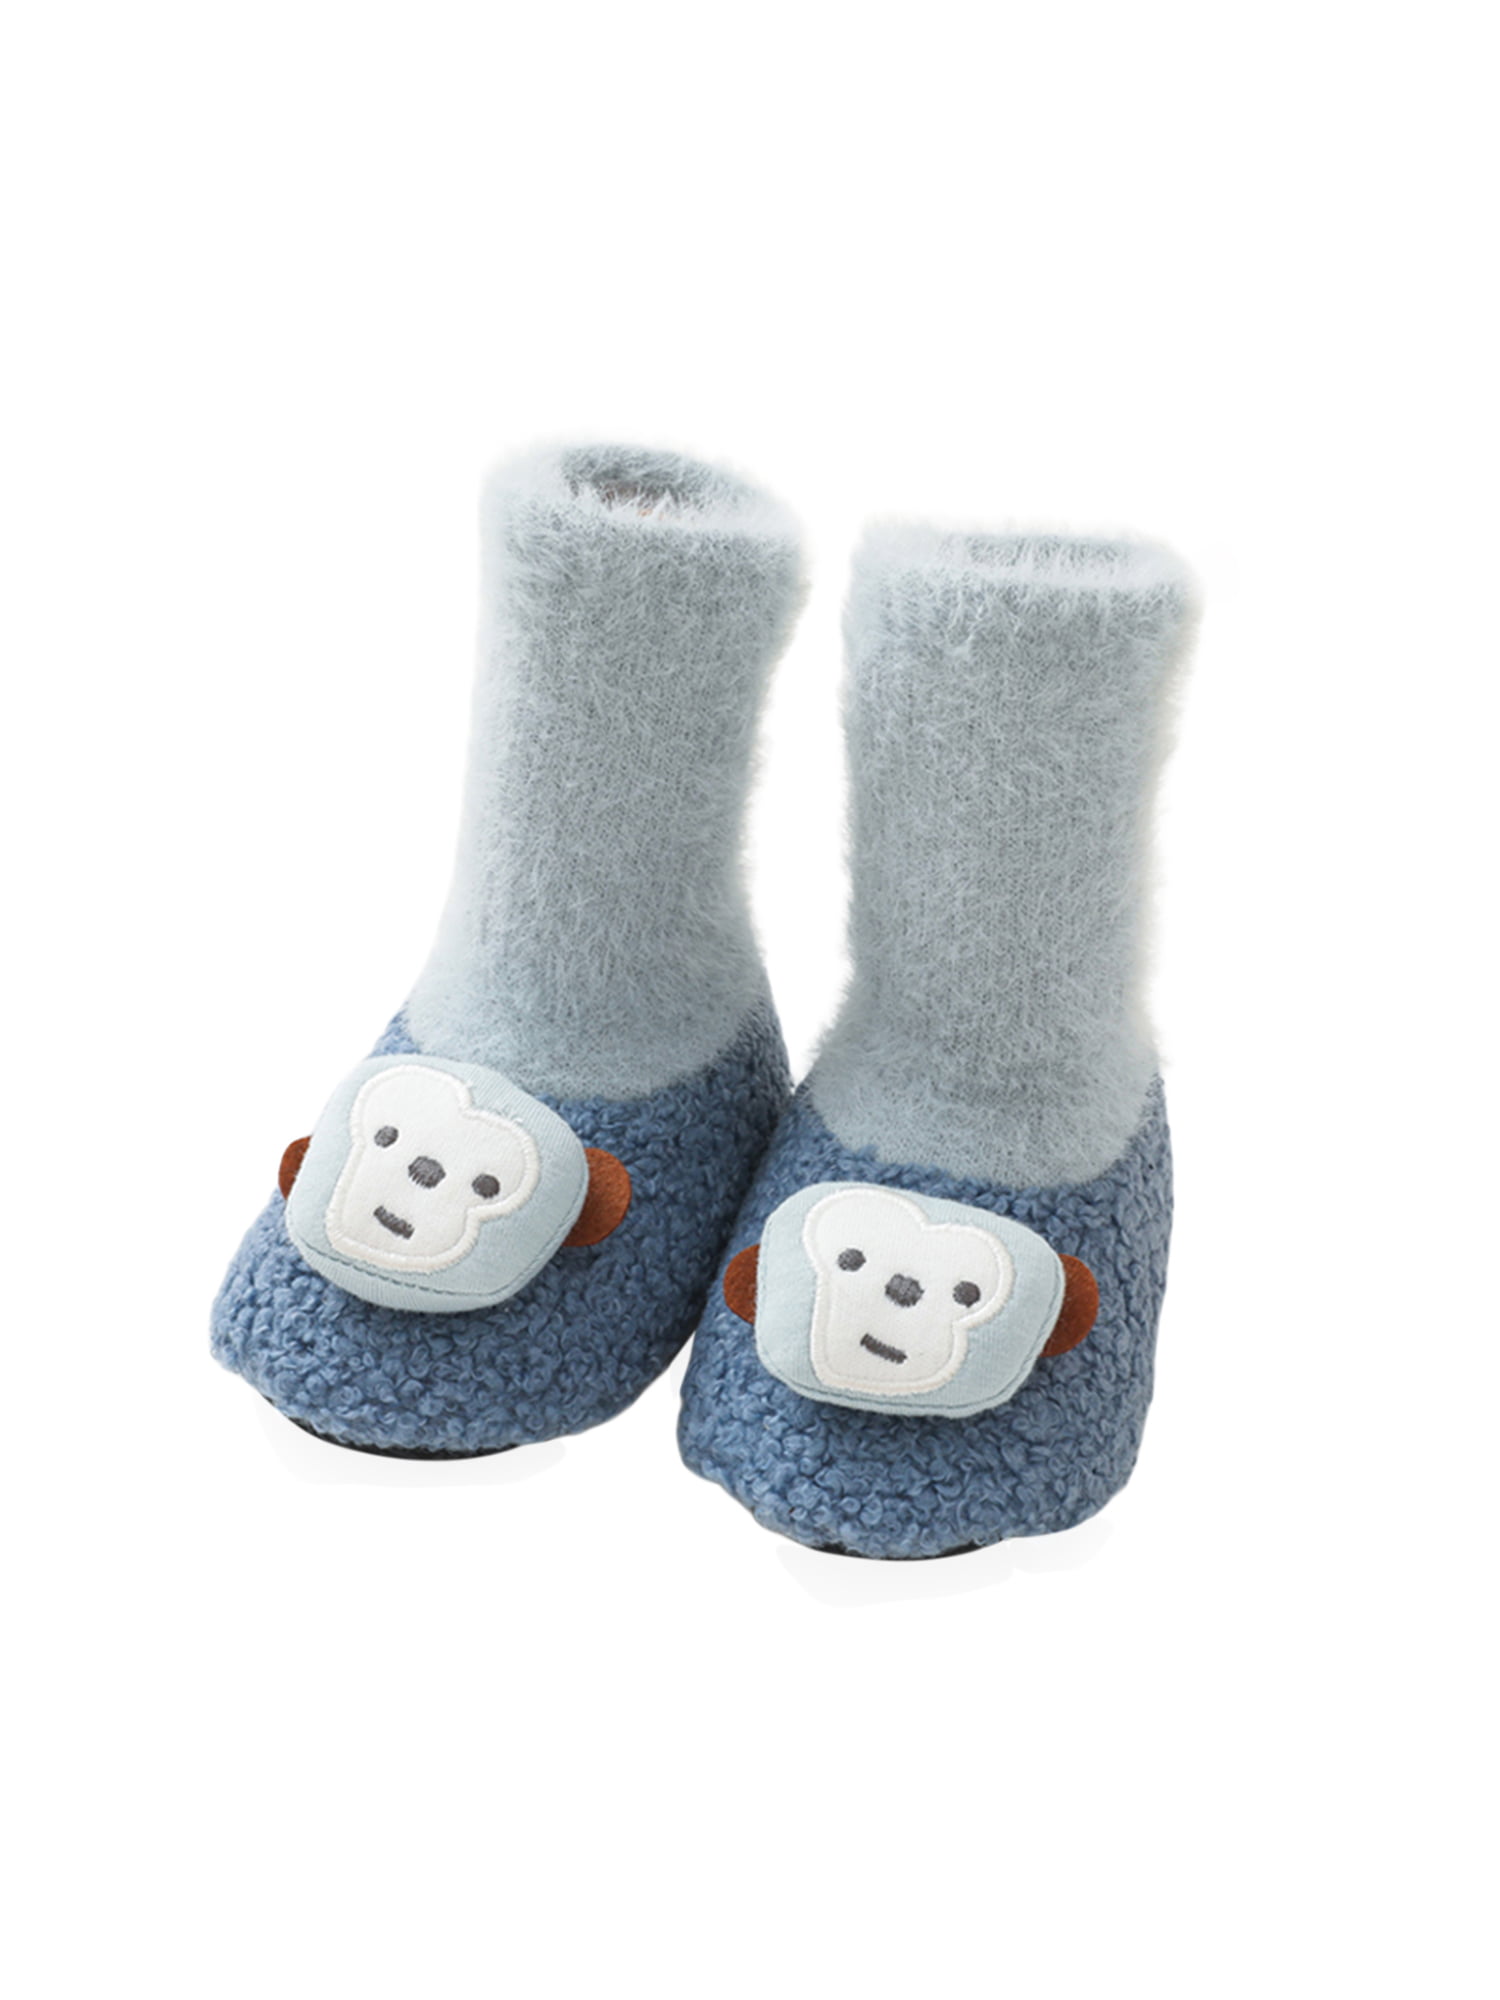 Sasairy 1 Pair Toddler Baby Anti-slip Sock Infant Cartoon Animal Indoor Floor Socks